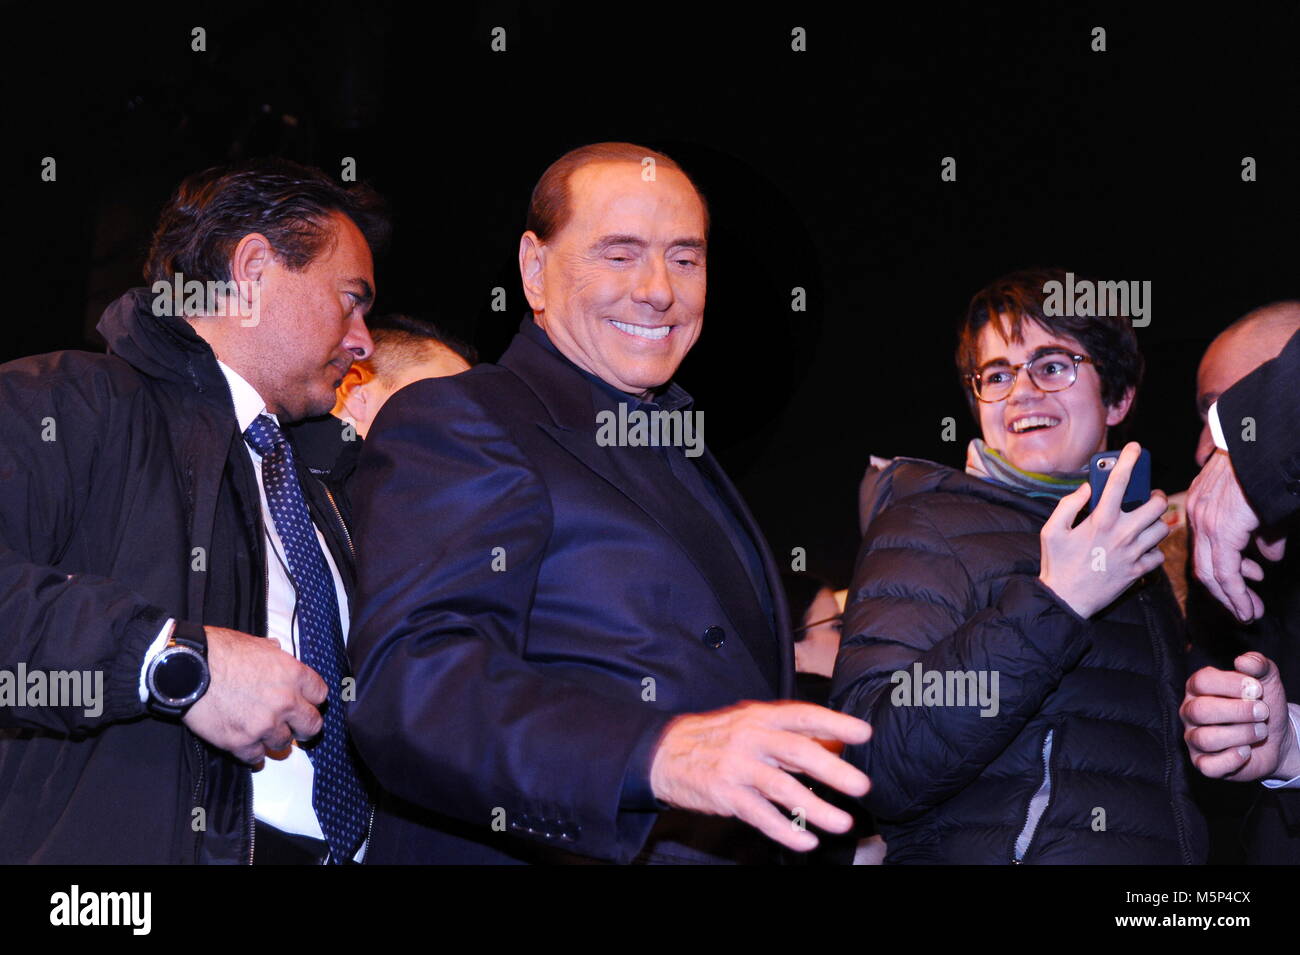 Milan, Election speech of Silvio Berlusconi at the Manzoni Theater ...